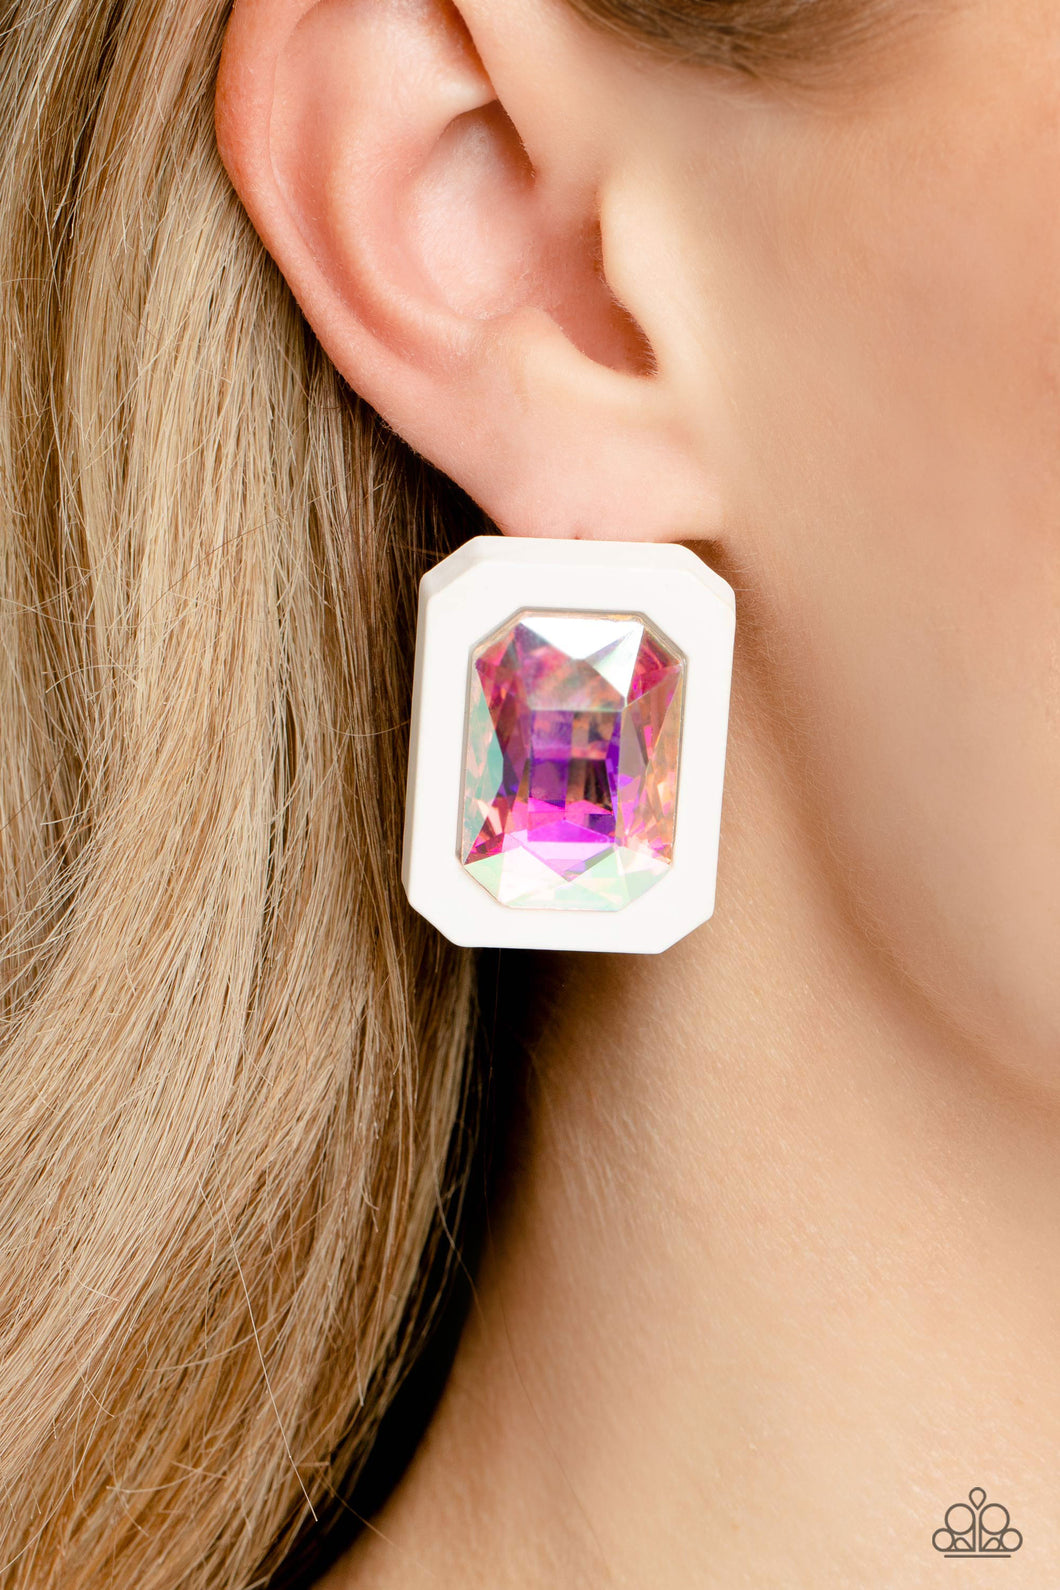 Paparazzi Jewelry Earrings Edgy Emeralds - Multi